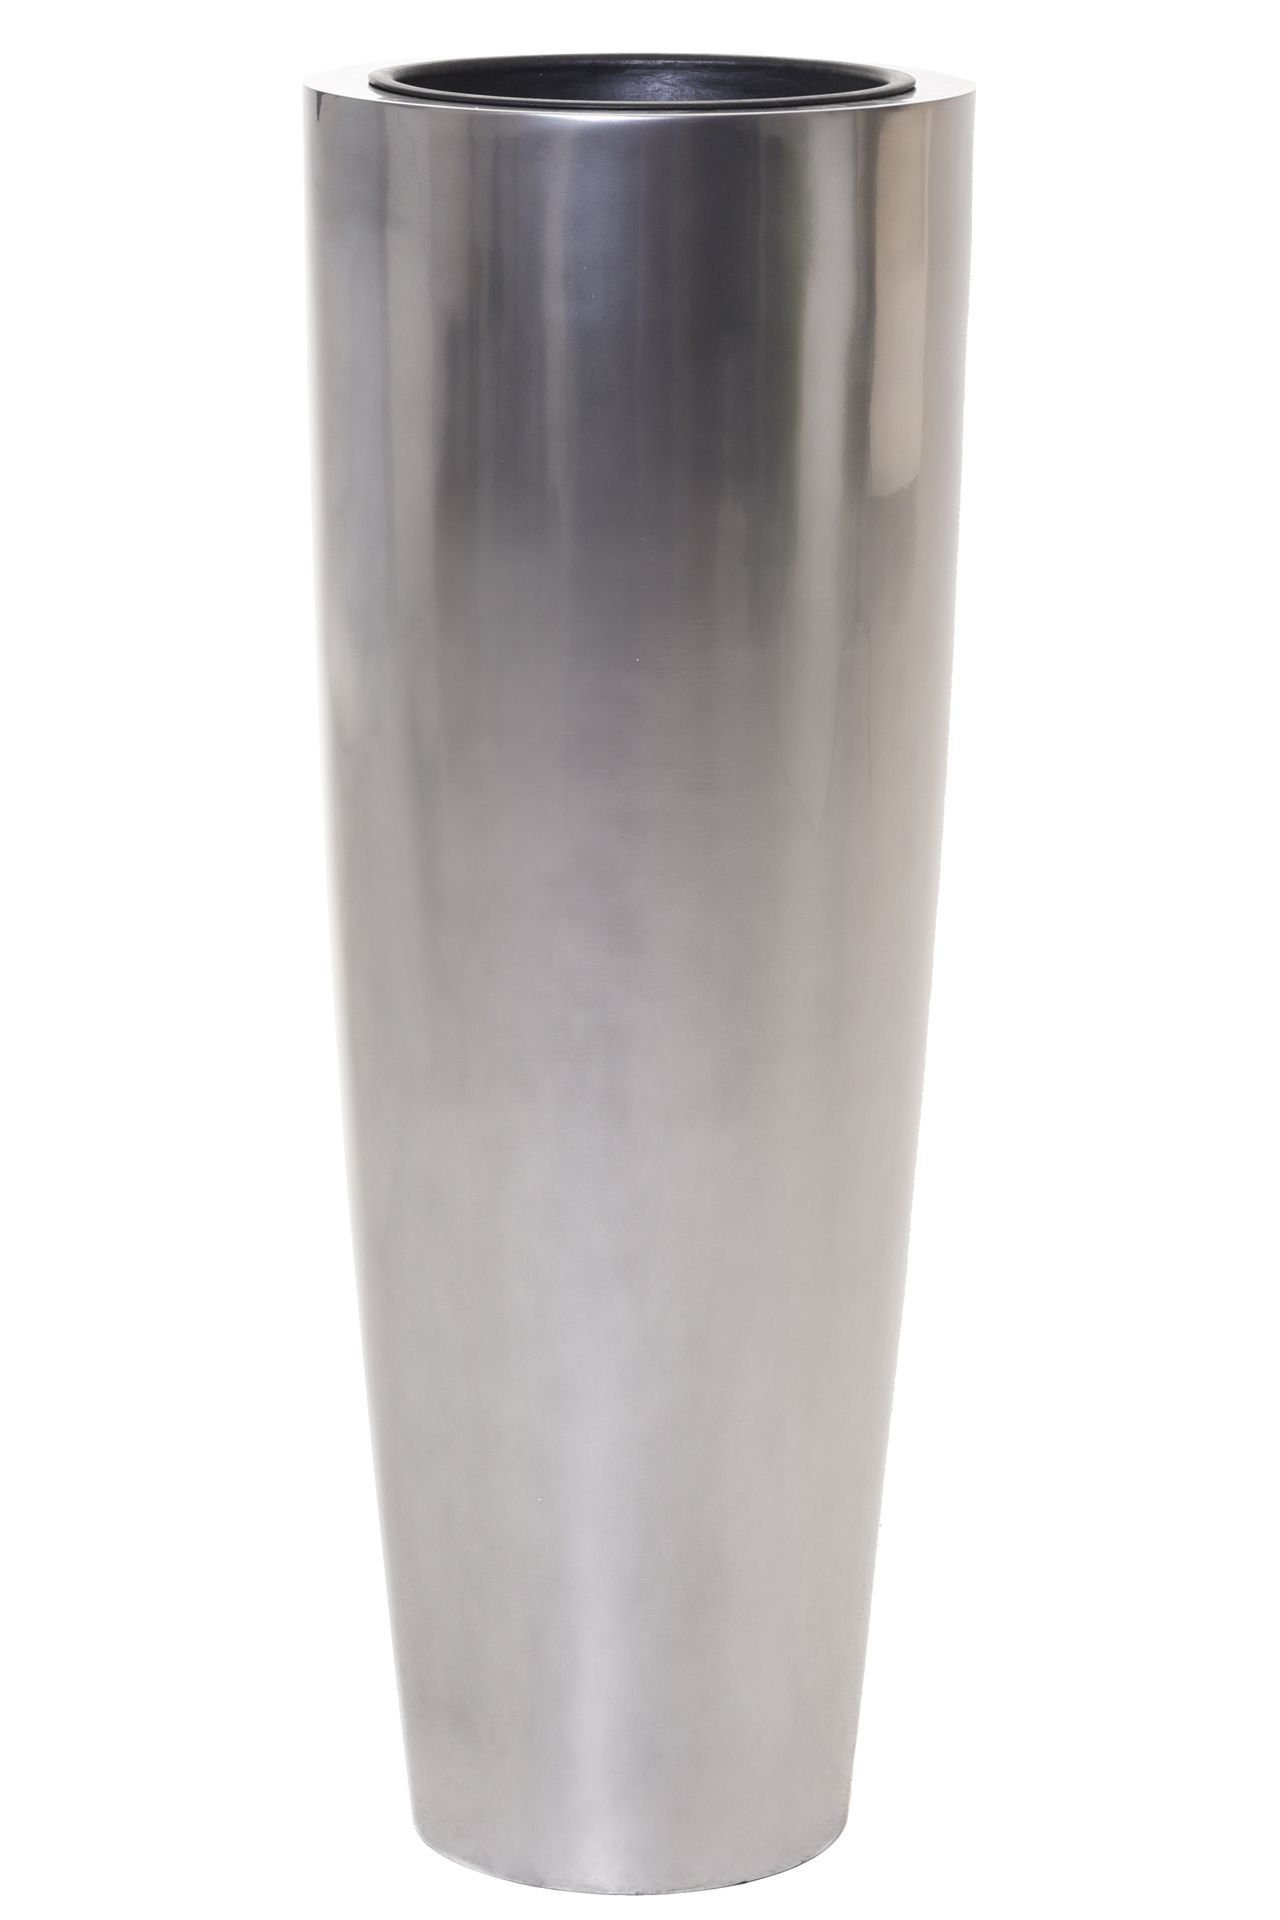 Pflanzkübel PILA exklusiv Pflanzkübel Pflanzgefäß VIVANNO hoch Metallic Silber - 37x100